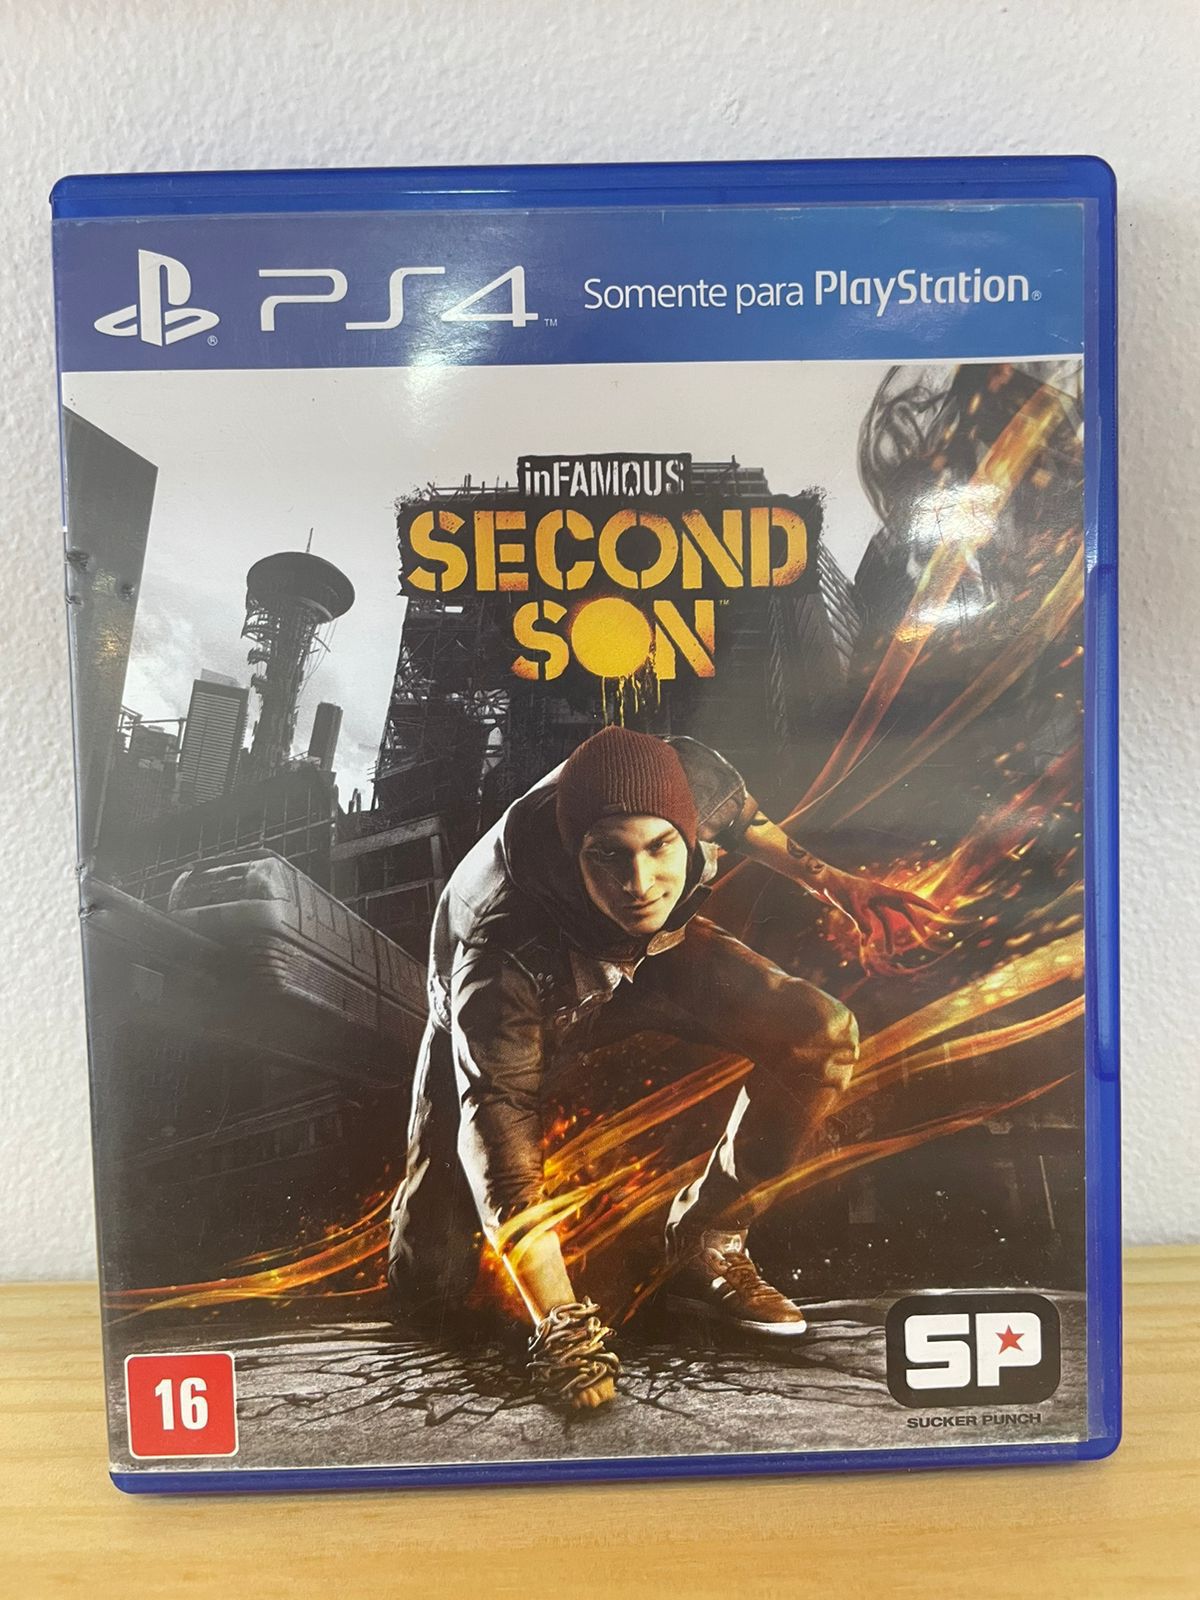 Jogo inFAMOUS: Second Son Playstation Hits PS4 Mídia Física - Saqueti